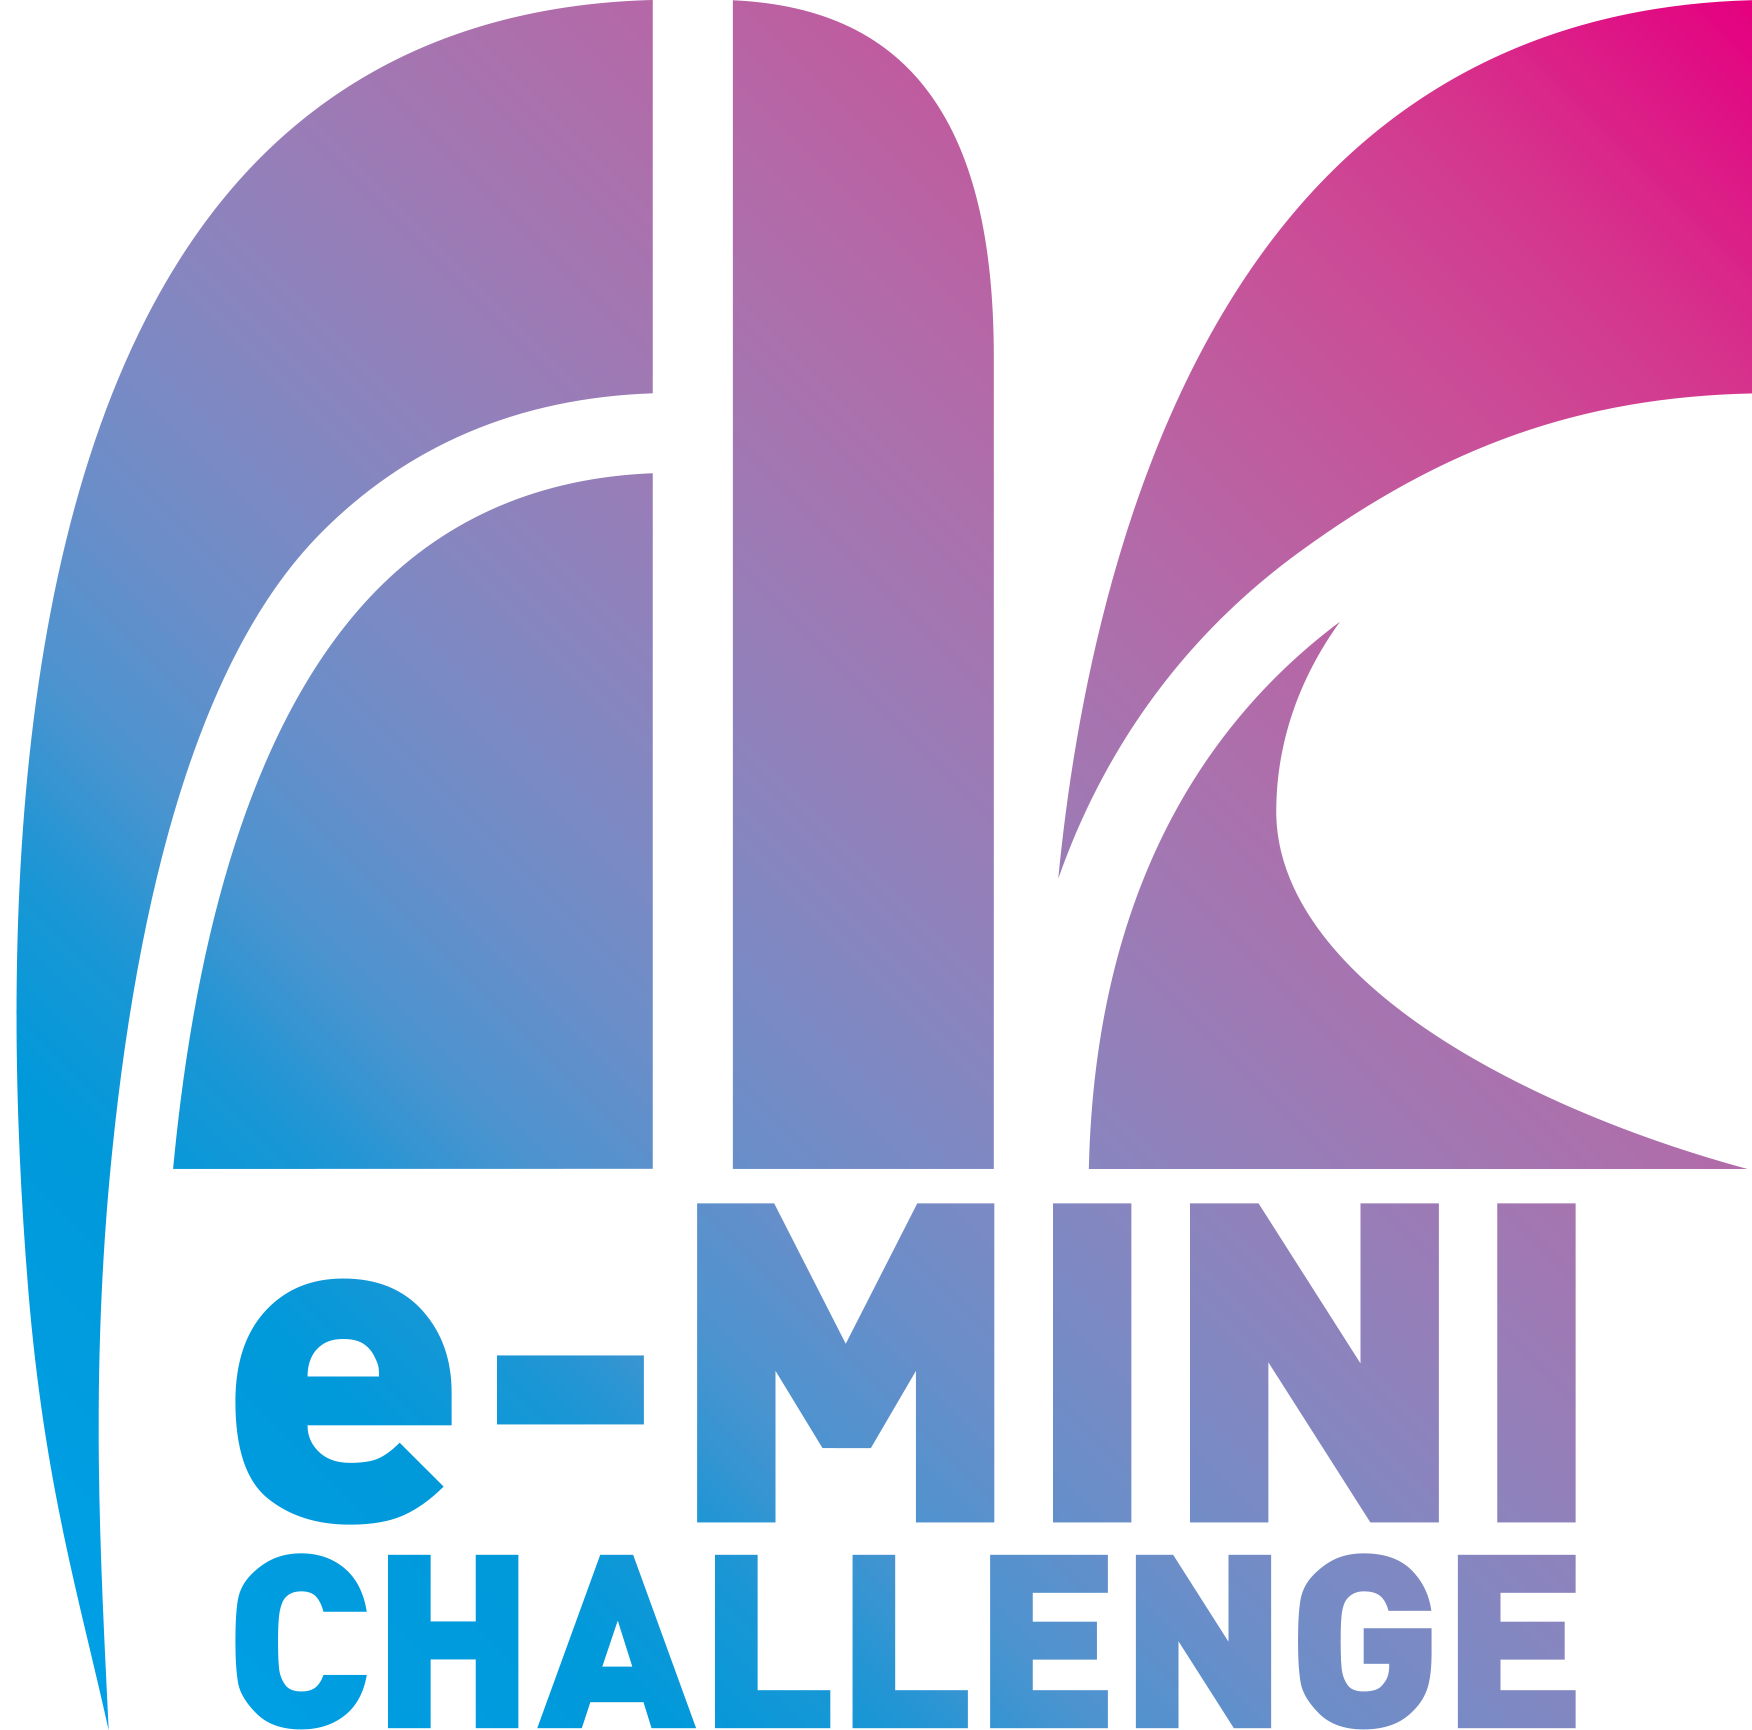 e-MINI CHALLENGE® 2021 S1 Rd.4 A/B ポイントランキング公開